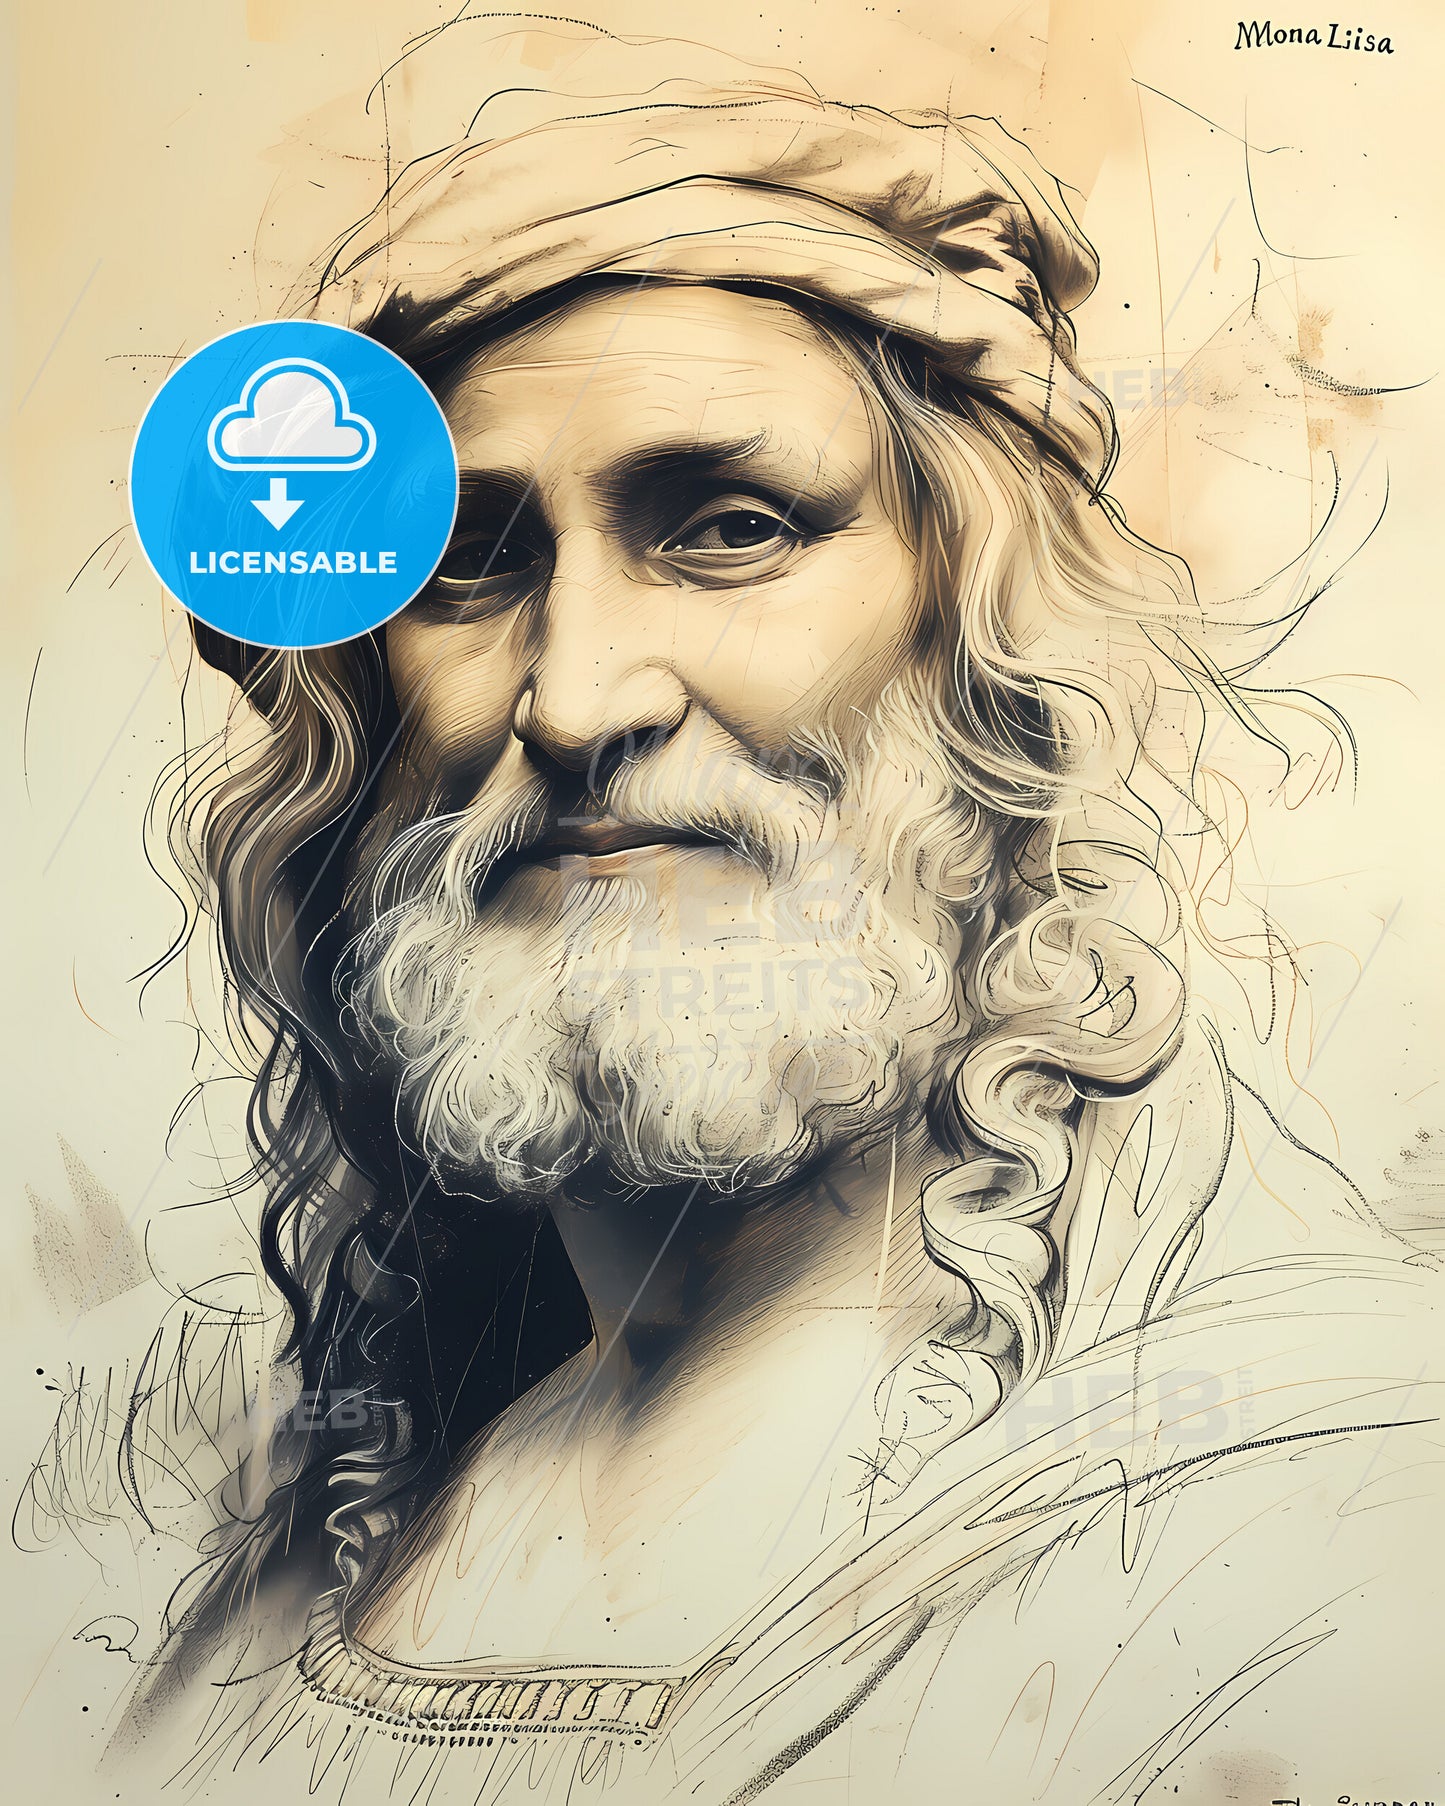 Leonardo, da Vinci, 1452 - 1519, a drawing of a man with a beard